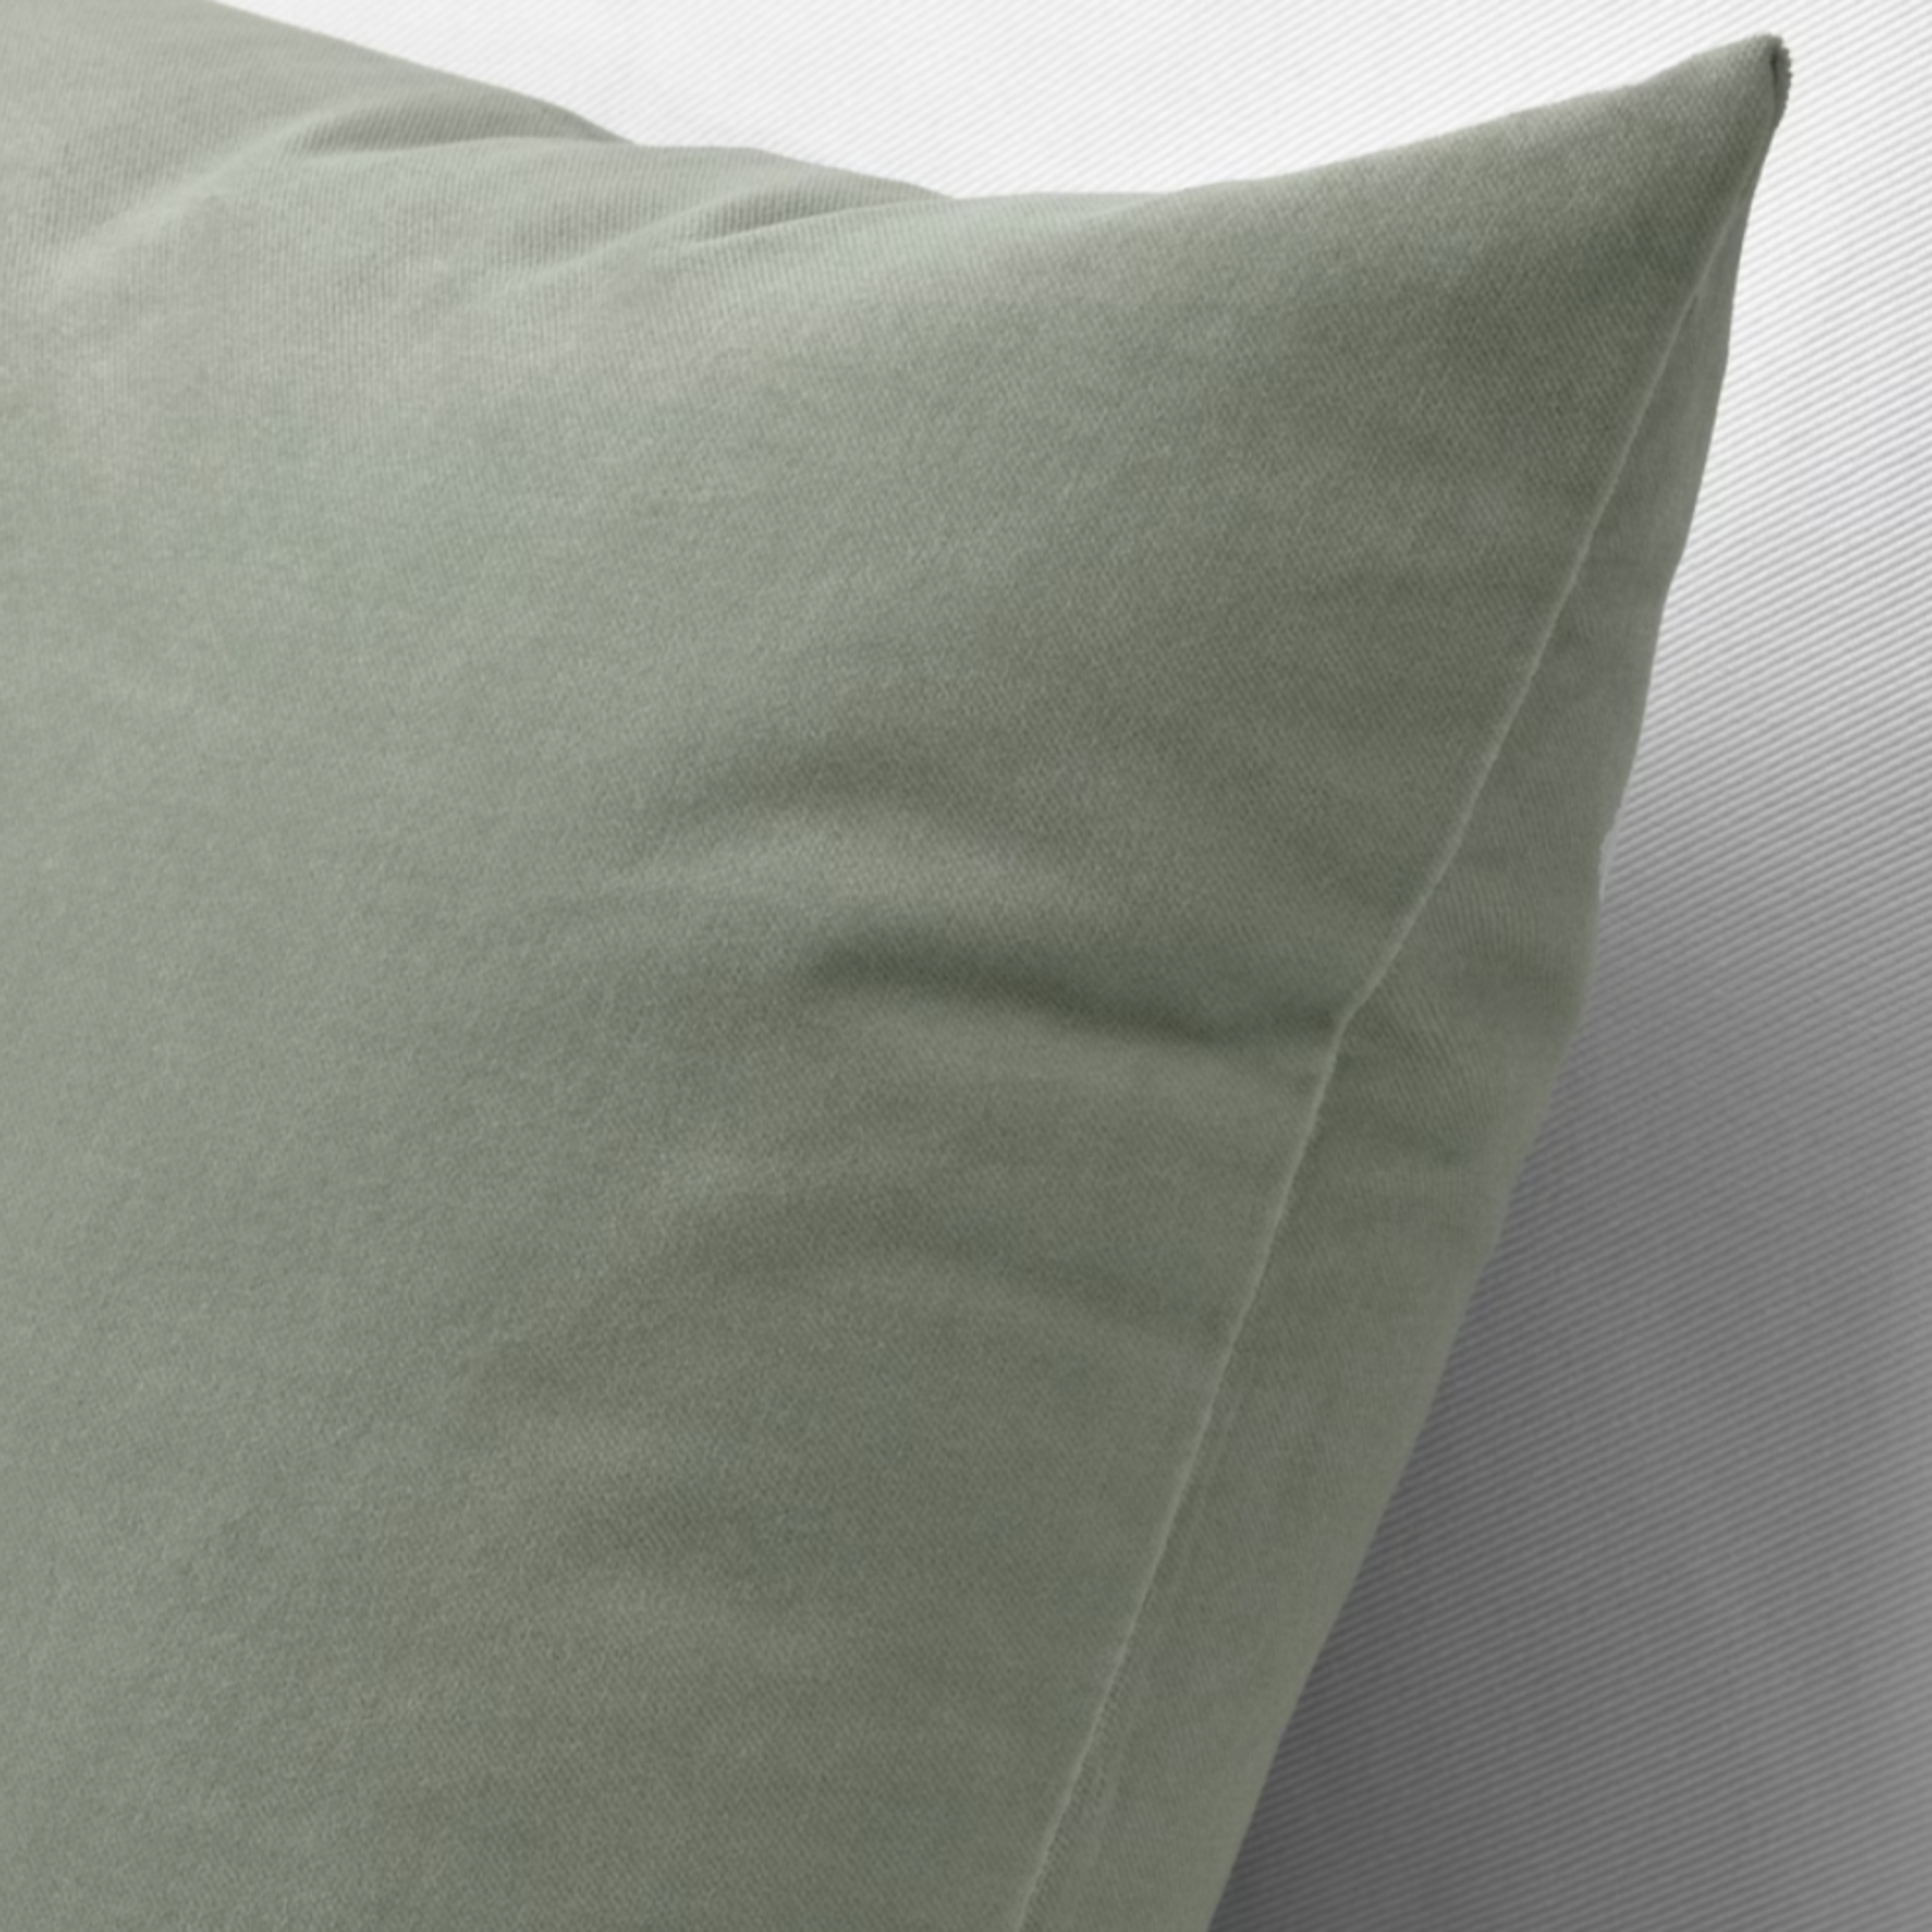 Ikea Sanela Cushion Cover 40x58cm, Grey-Green (8581299568927)